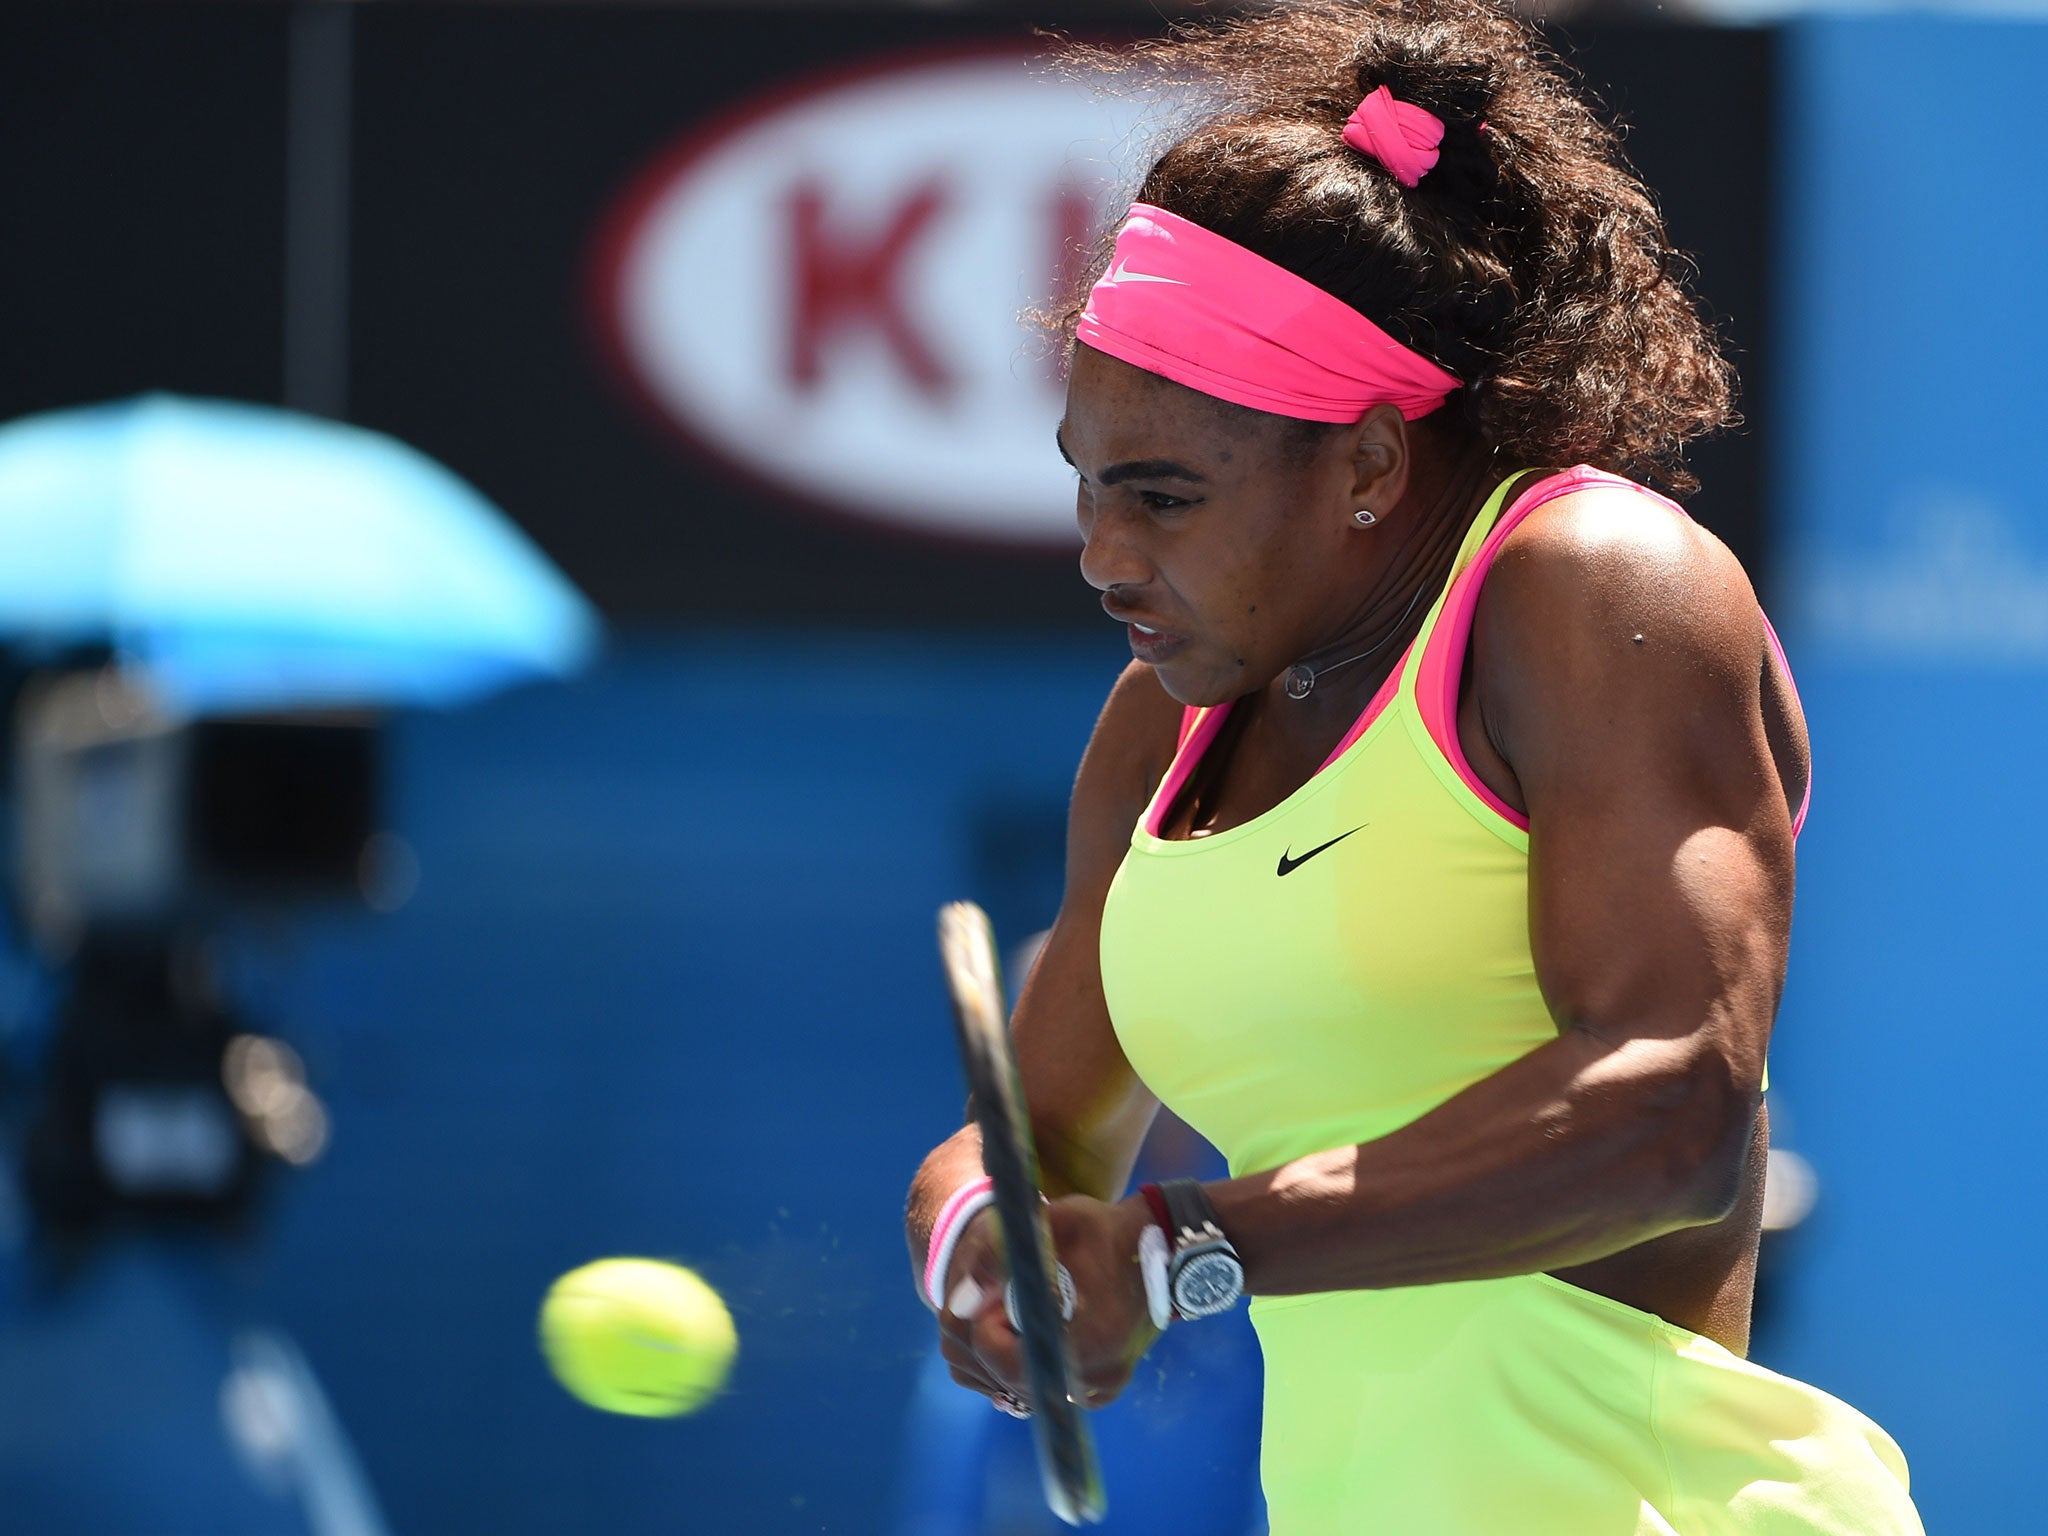 Serena Williams recovered from a set down to beat Garbine Muguruza